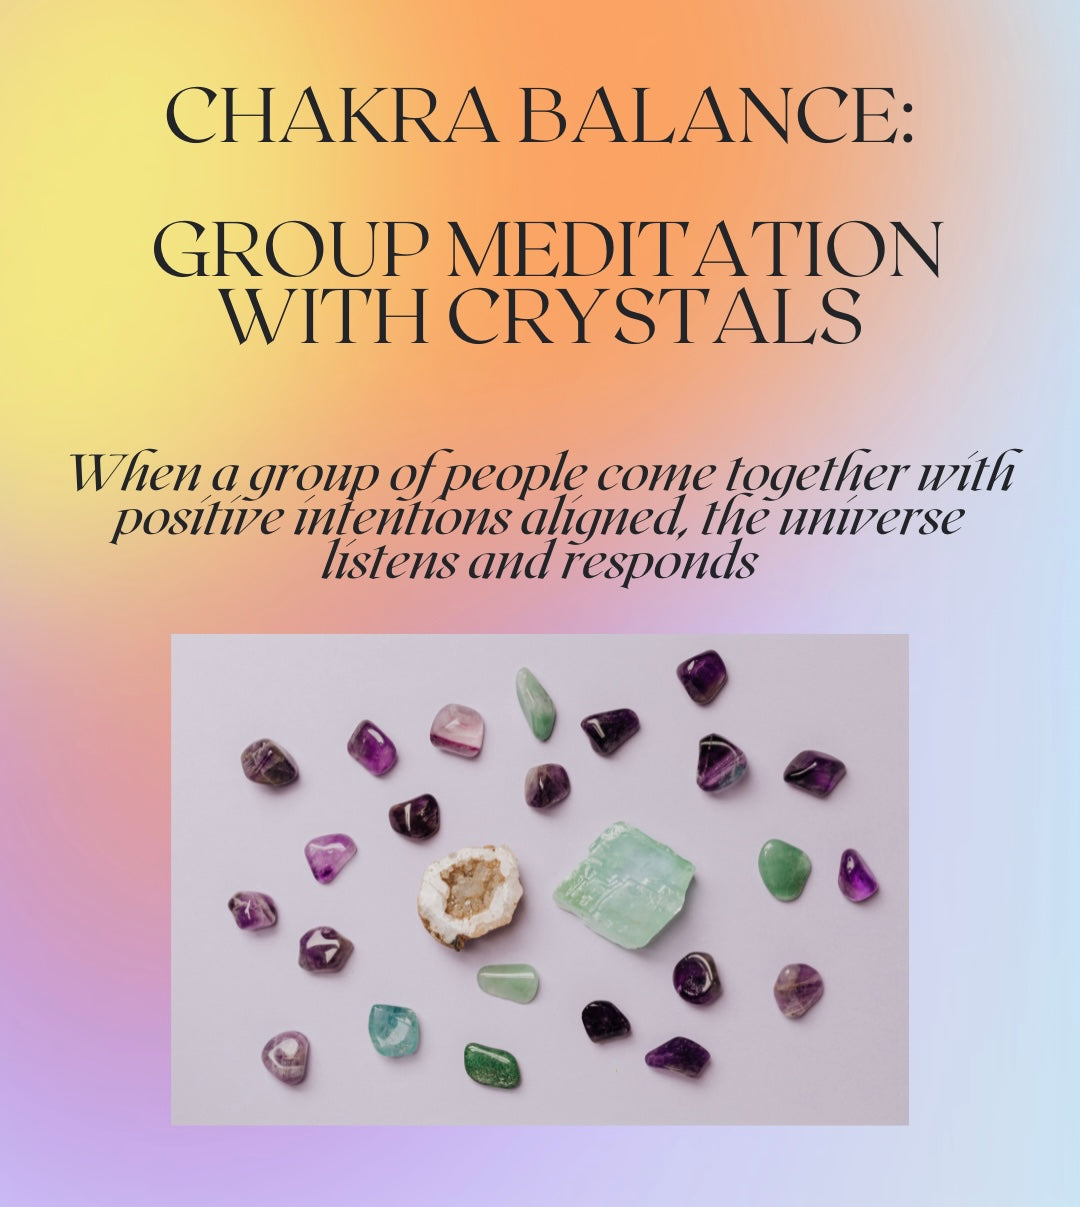 Chakra Balance: Group Meditation With Crystals